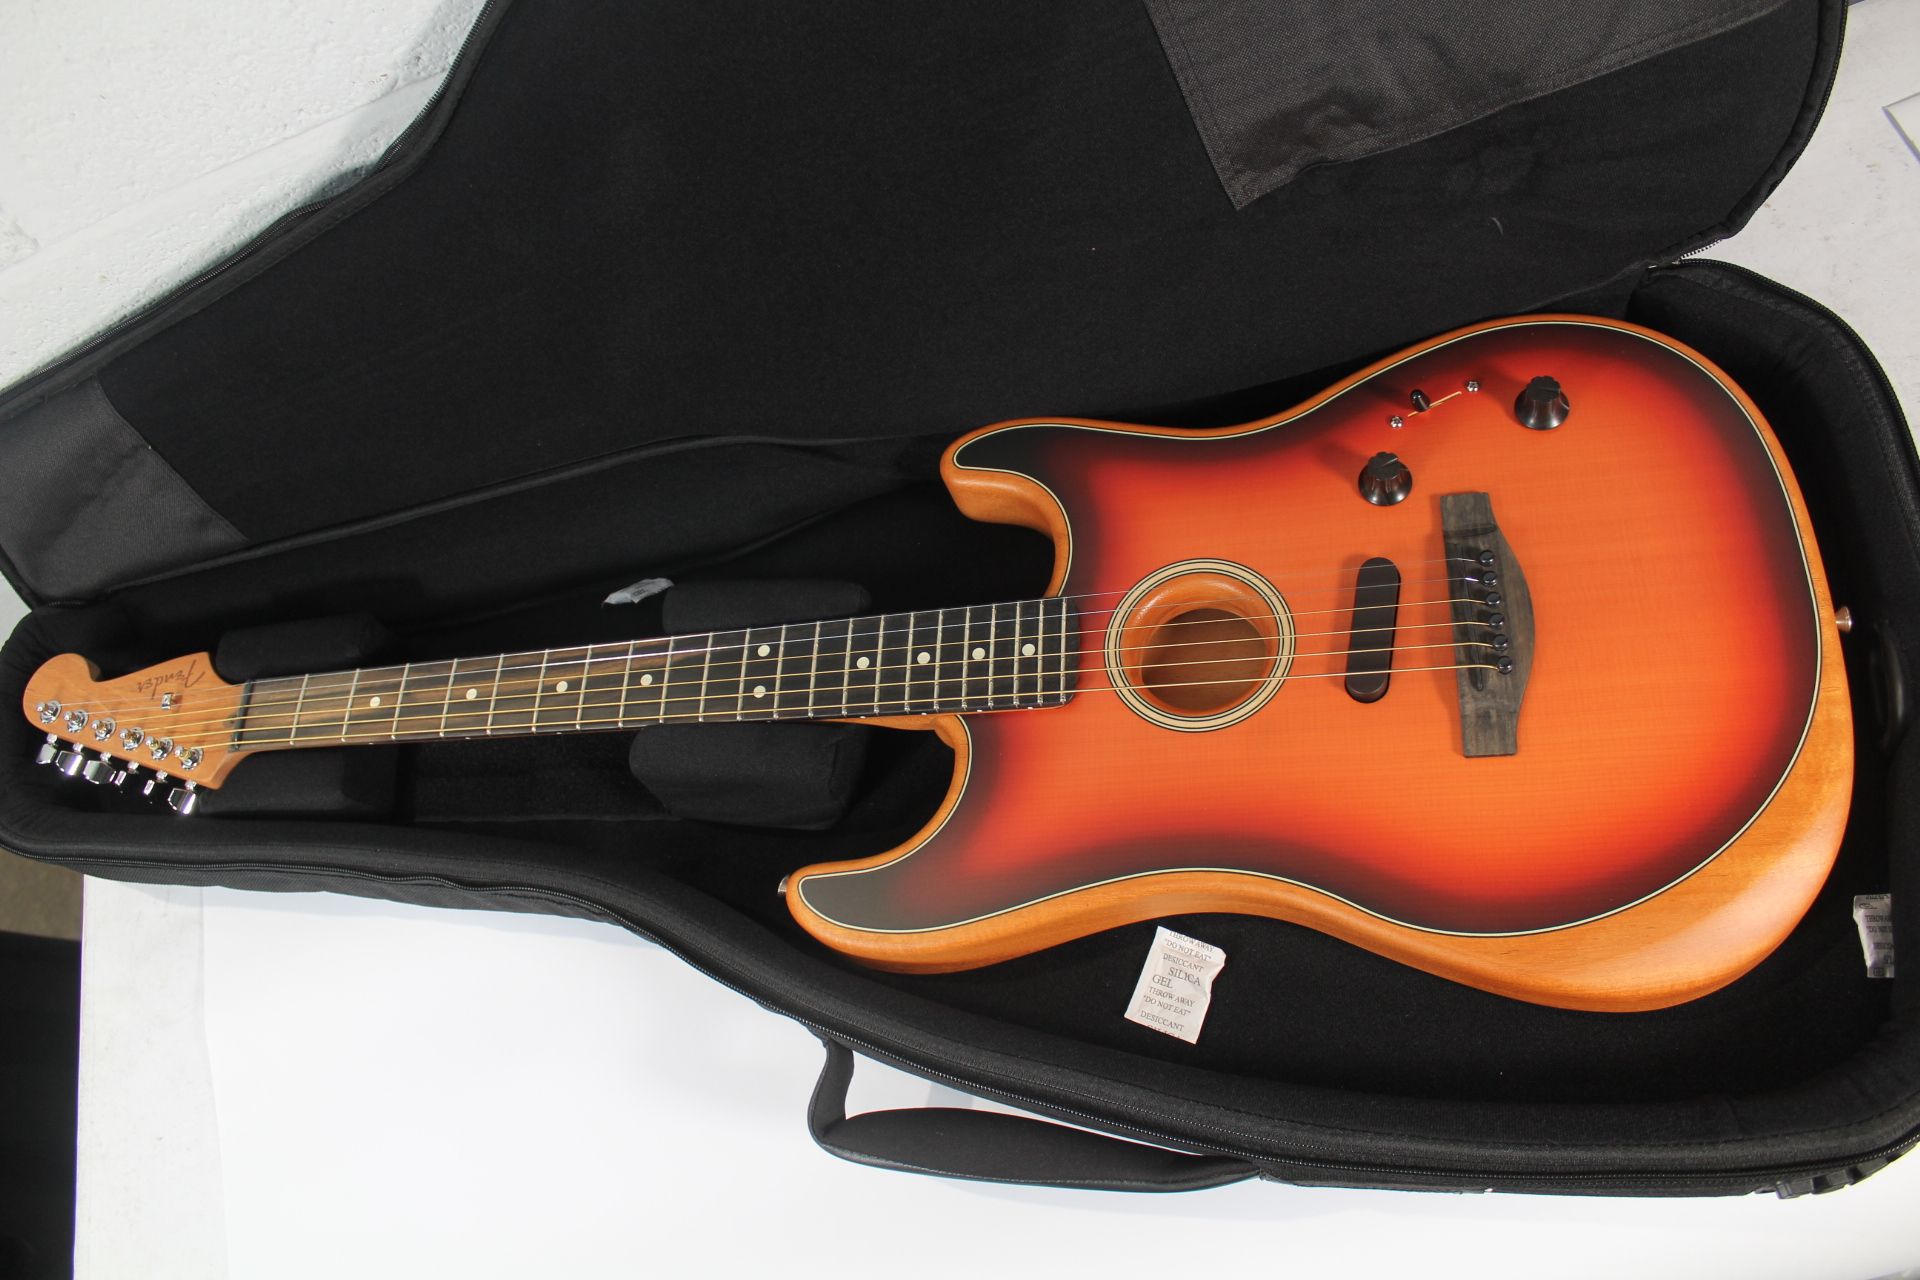 Fender American Acoustasonic Stratocaster (Acoustic/electric guitar) - 3-Tone Sunburst - As New.